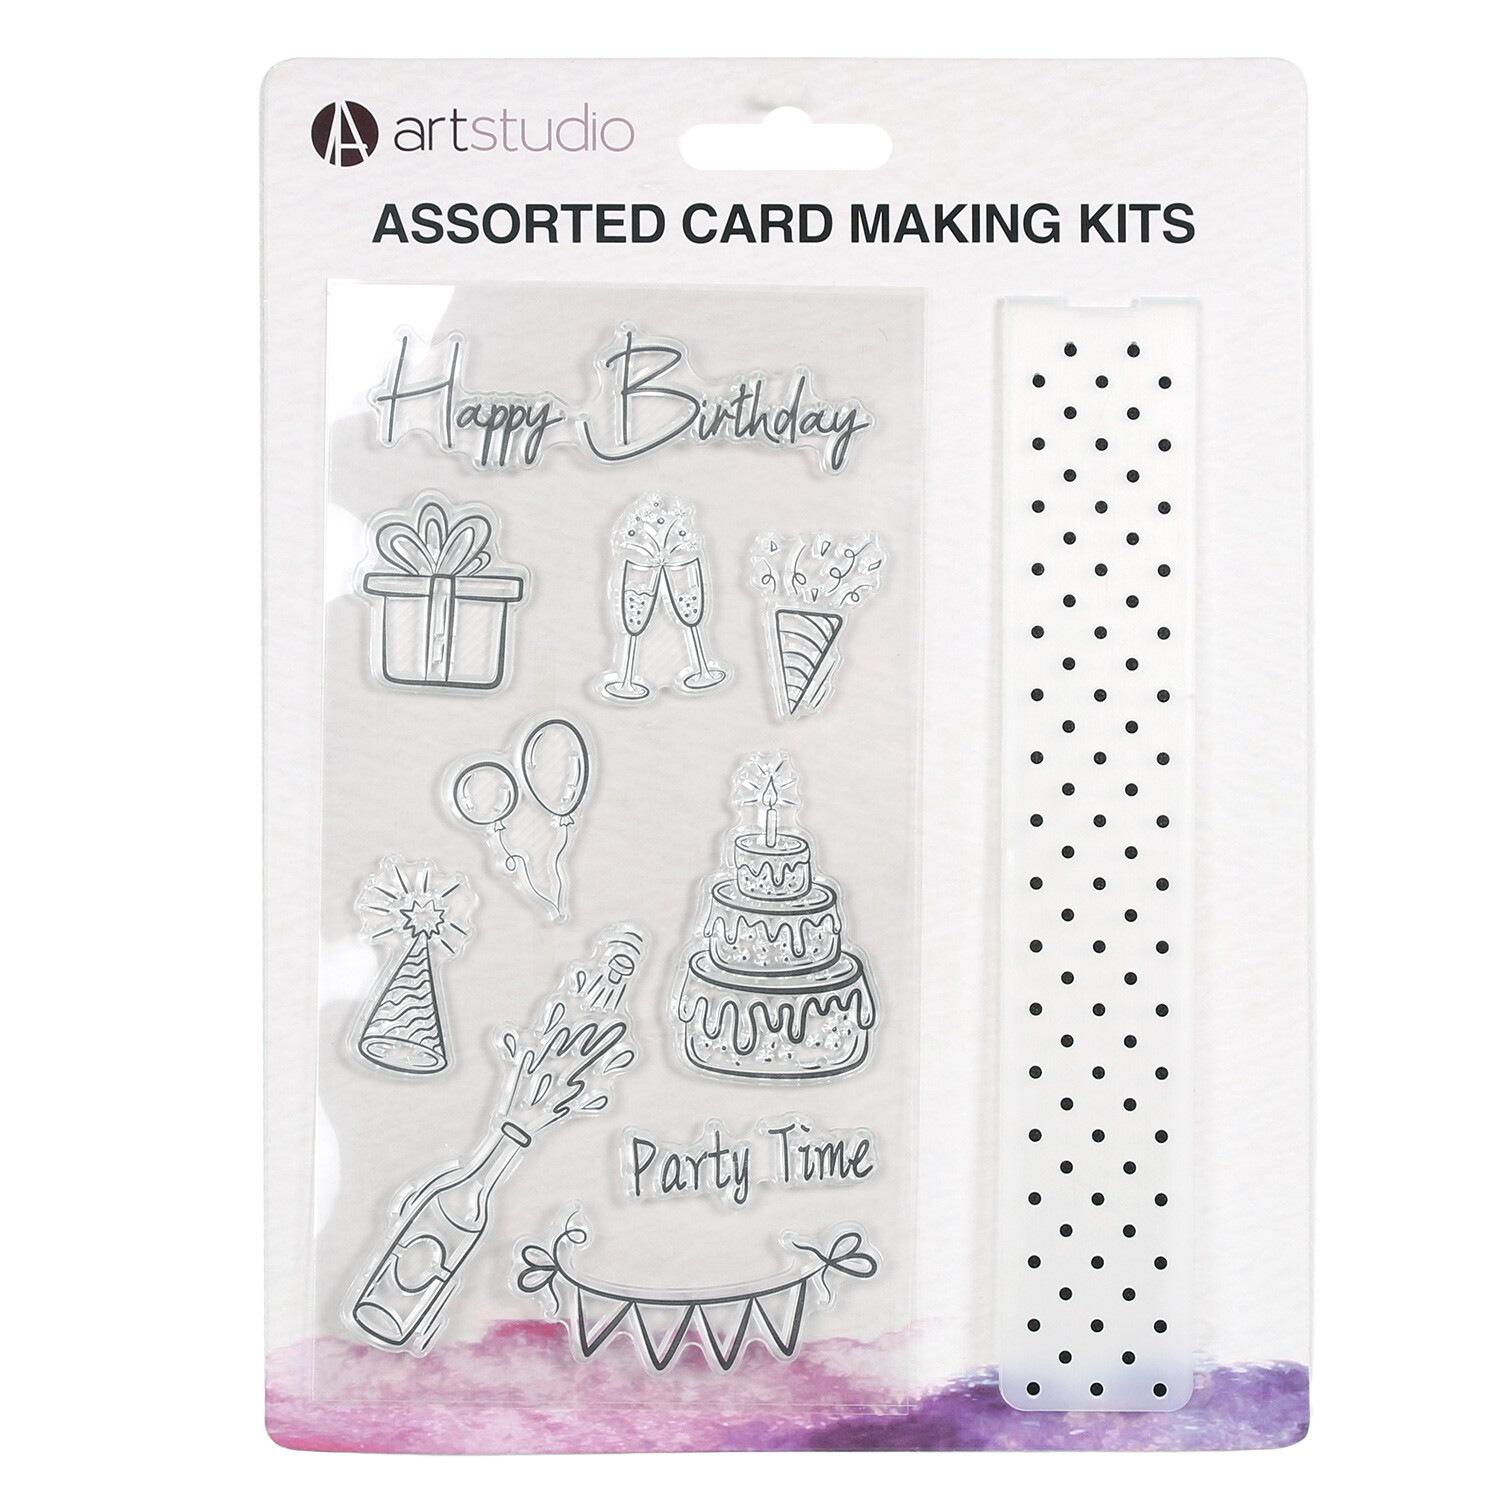 Single Art Studio Card Making Kit in Assorted styles Image 3